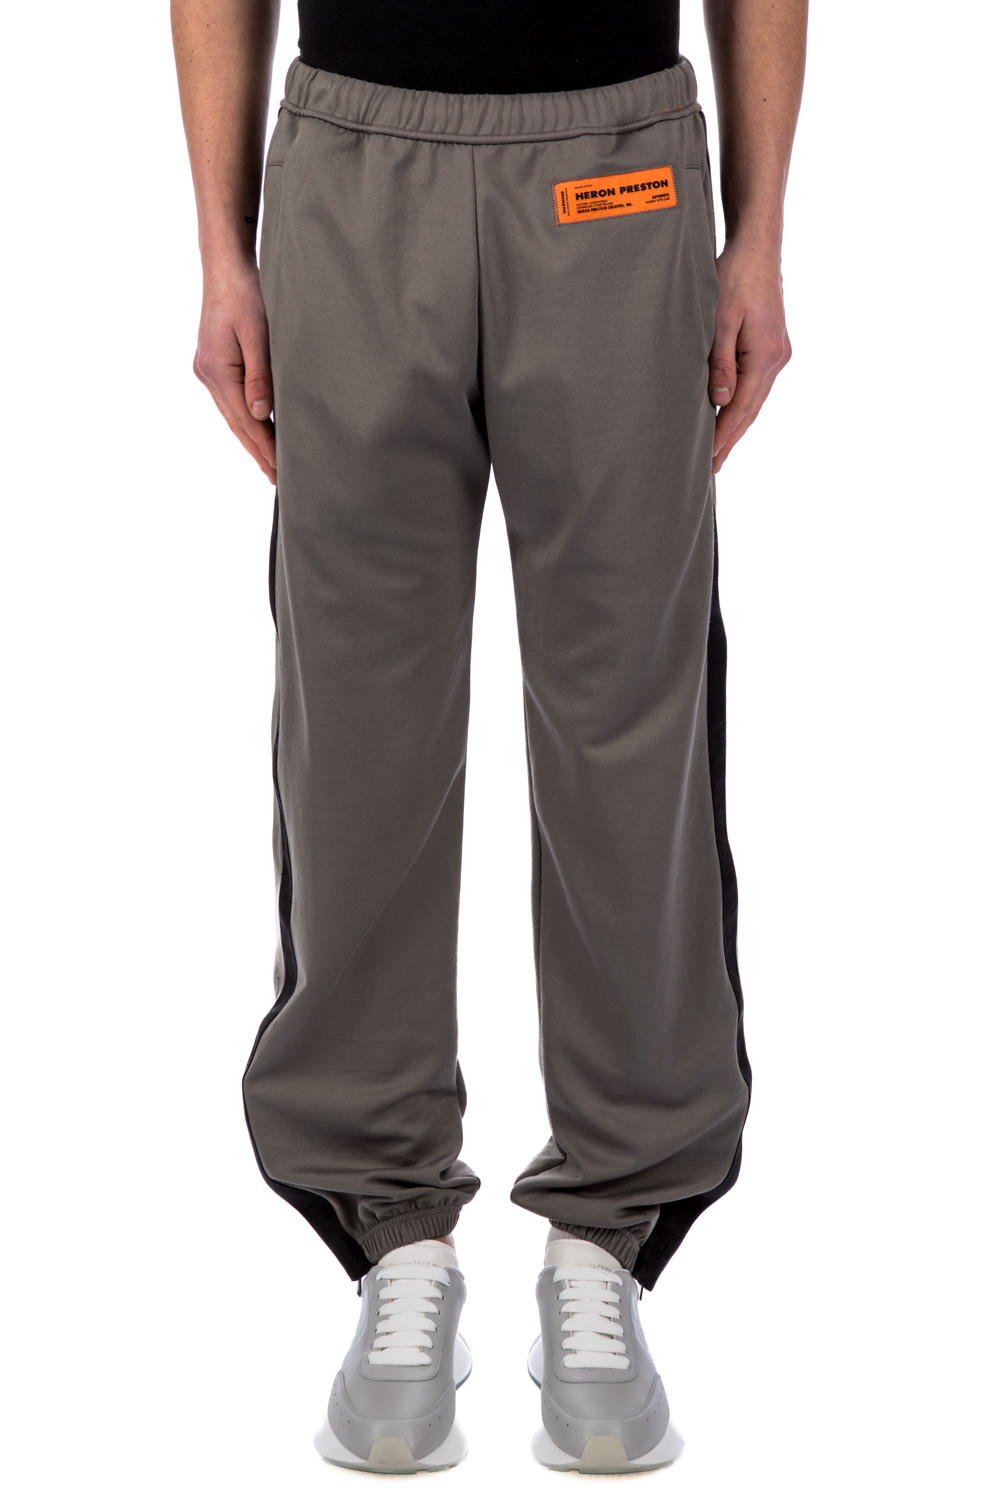 Heron Preston Skinny Leg Pants - Grey, 8.5 Rise Pants, Clothing -  WHEOP24297